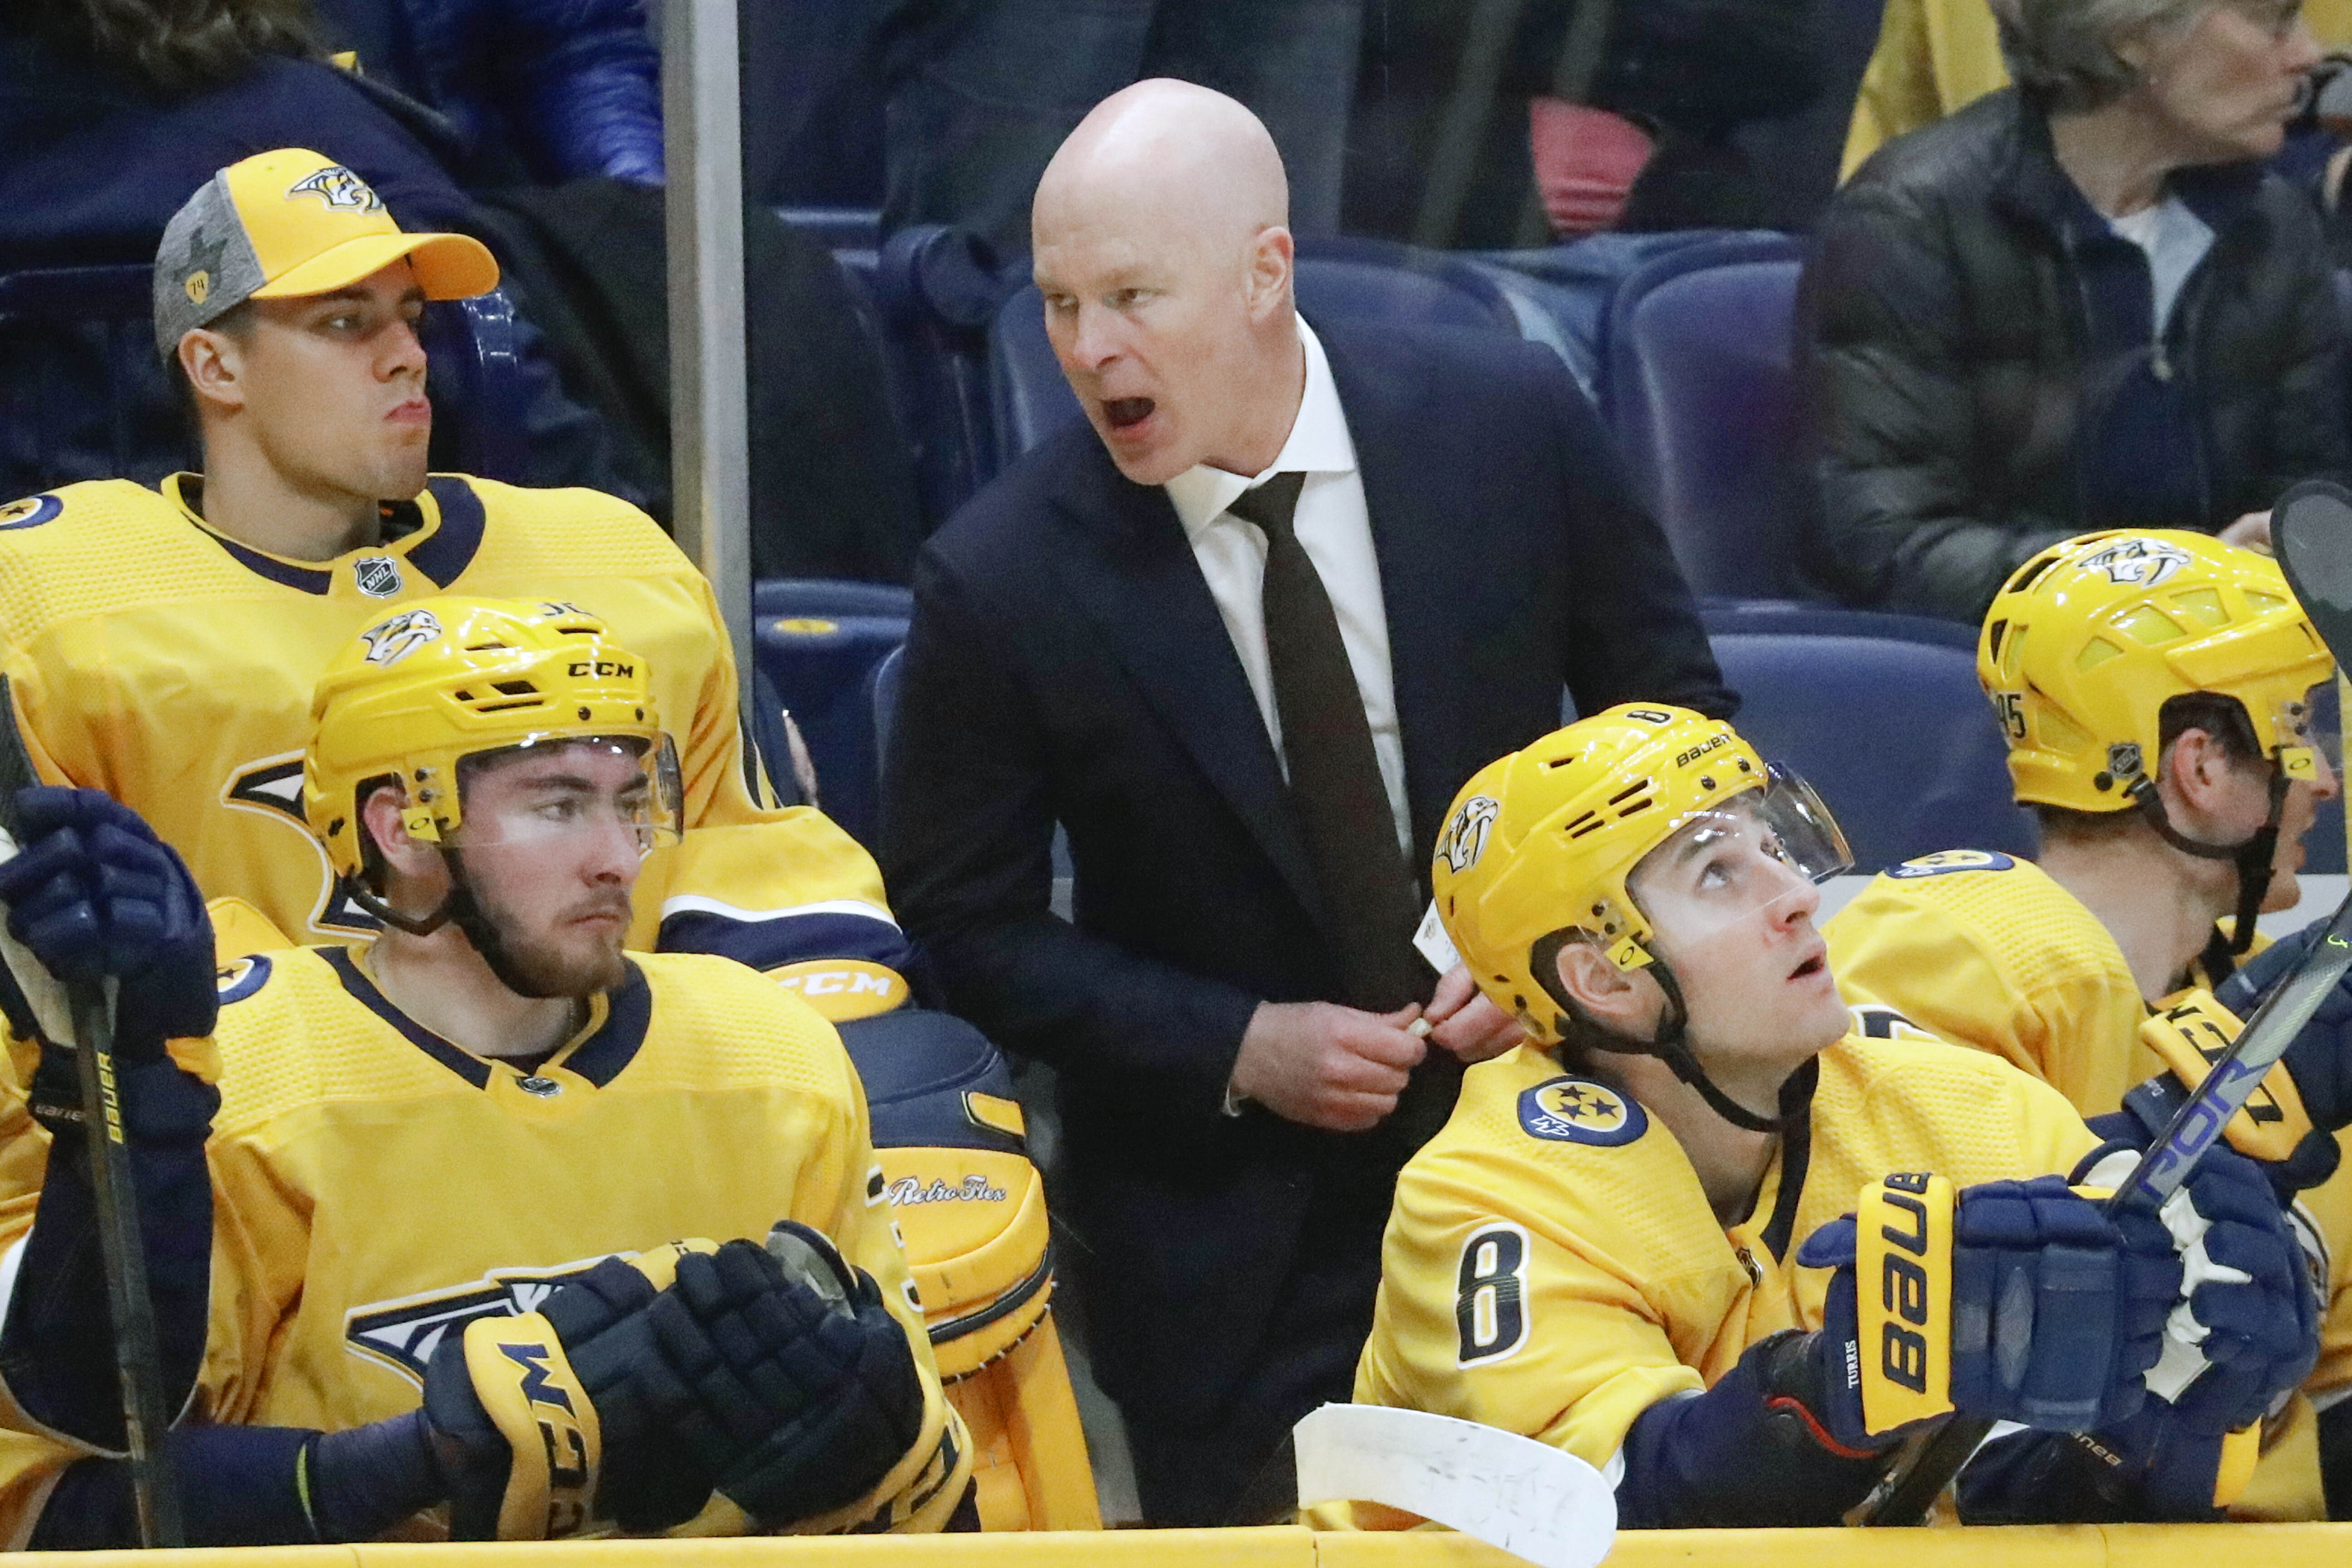 Bruins beat Predators 6-2 to spoil Hynes’ debut as coach